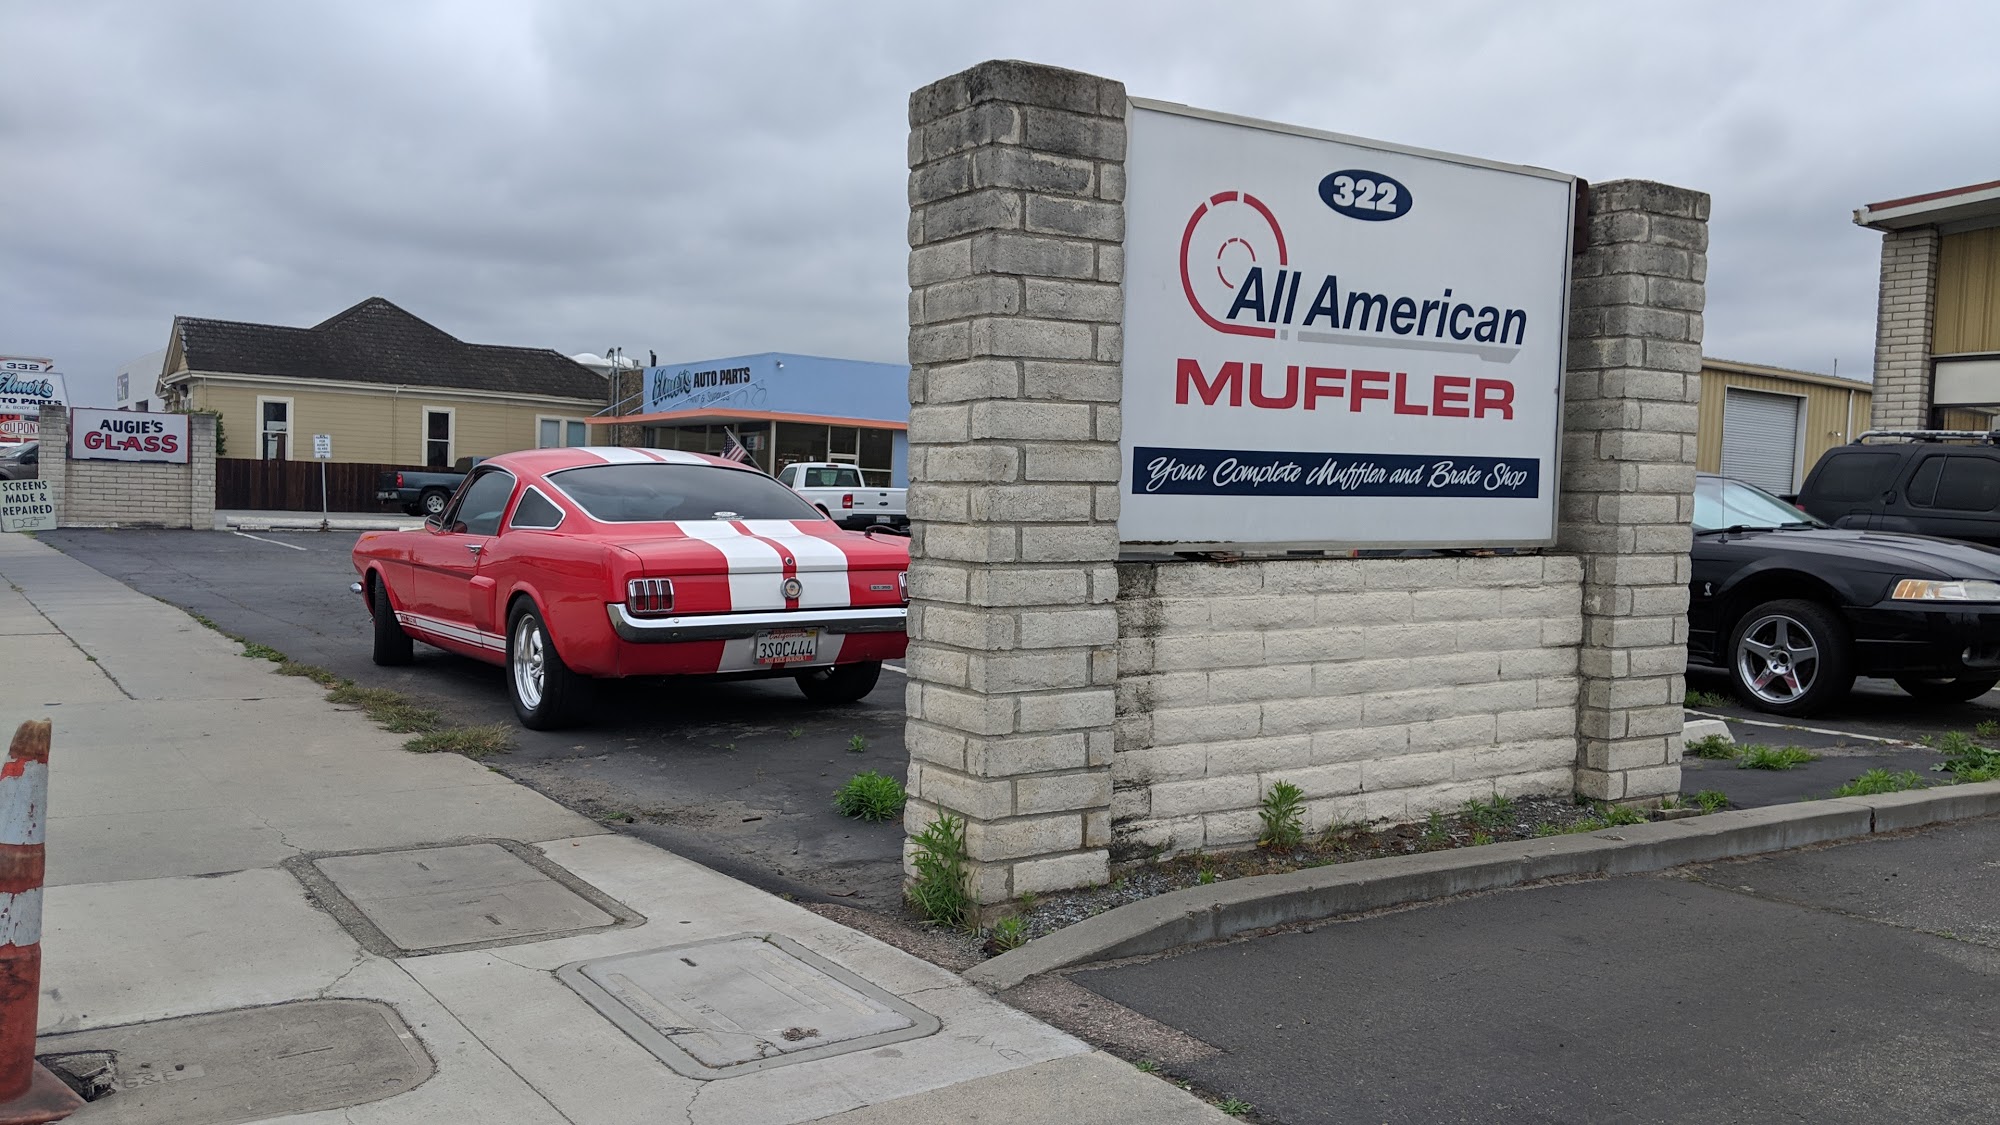 All American Muffler